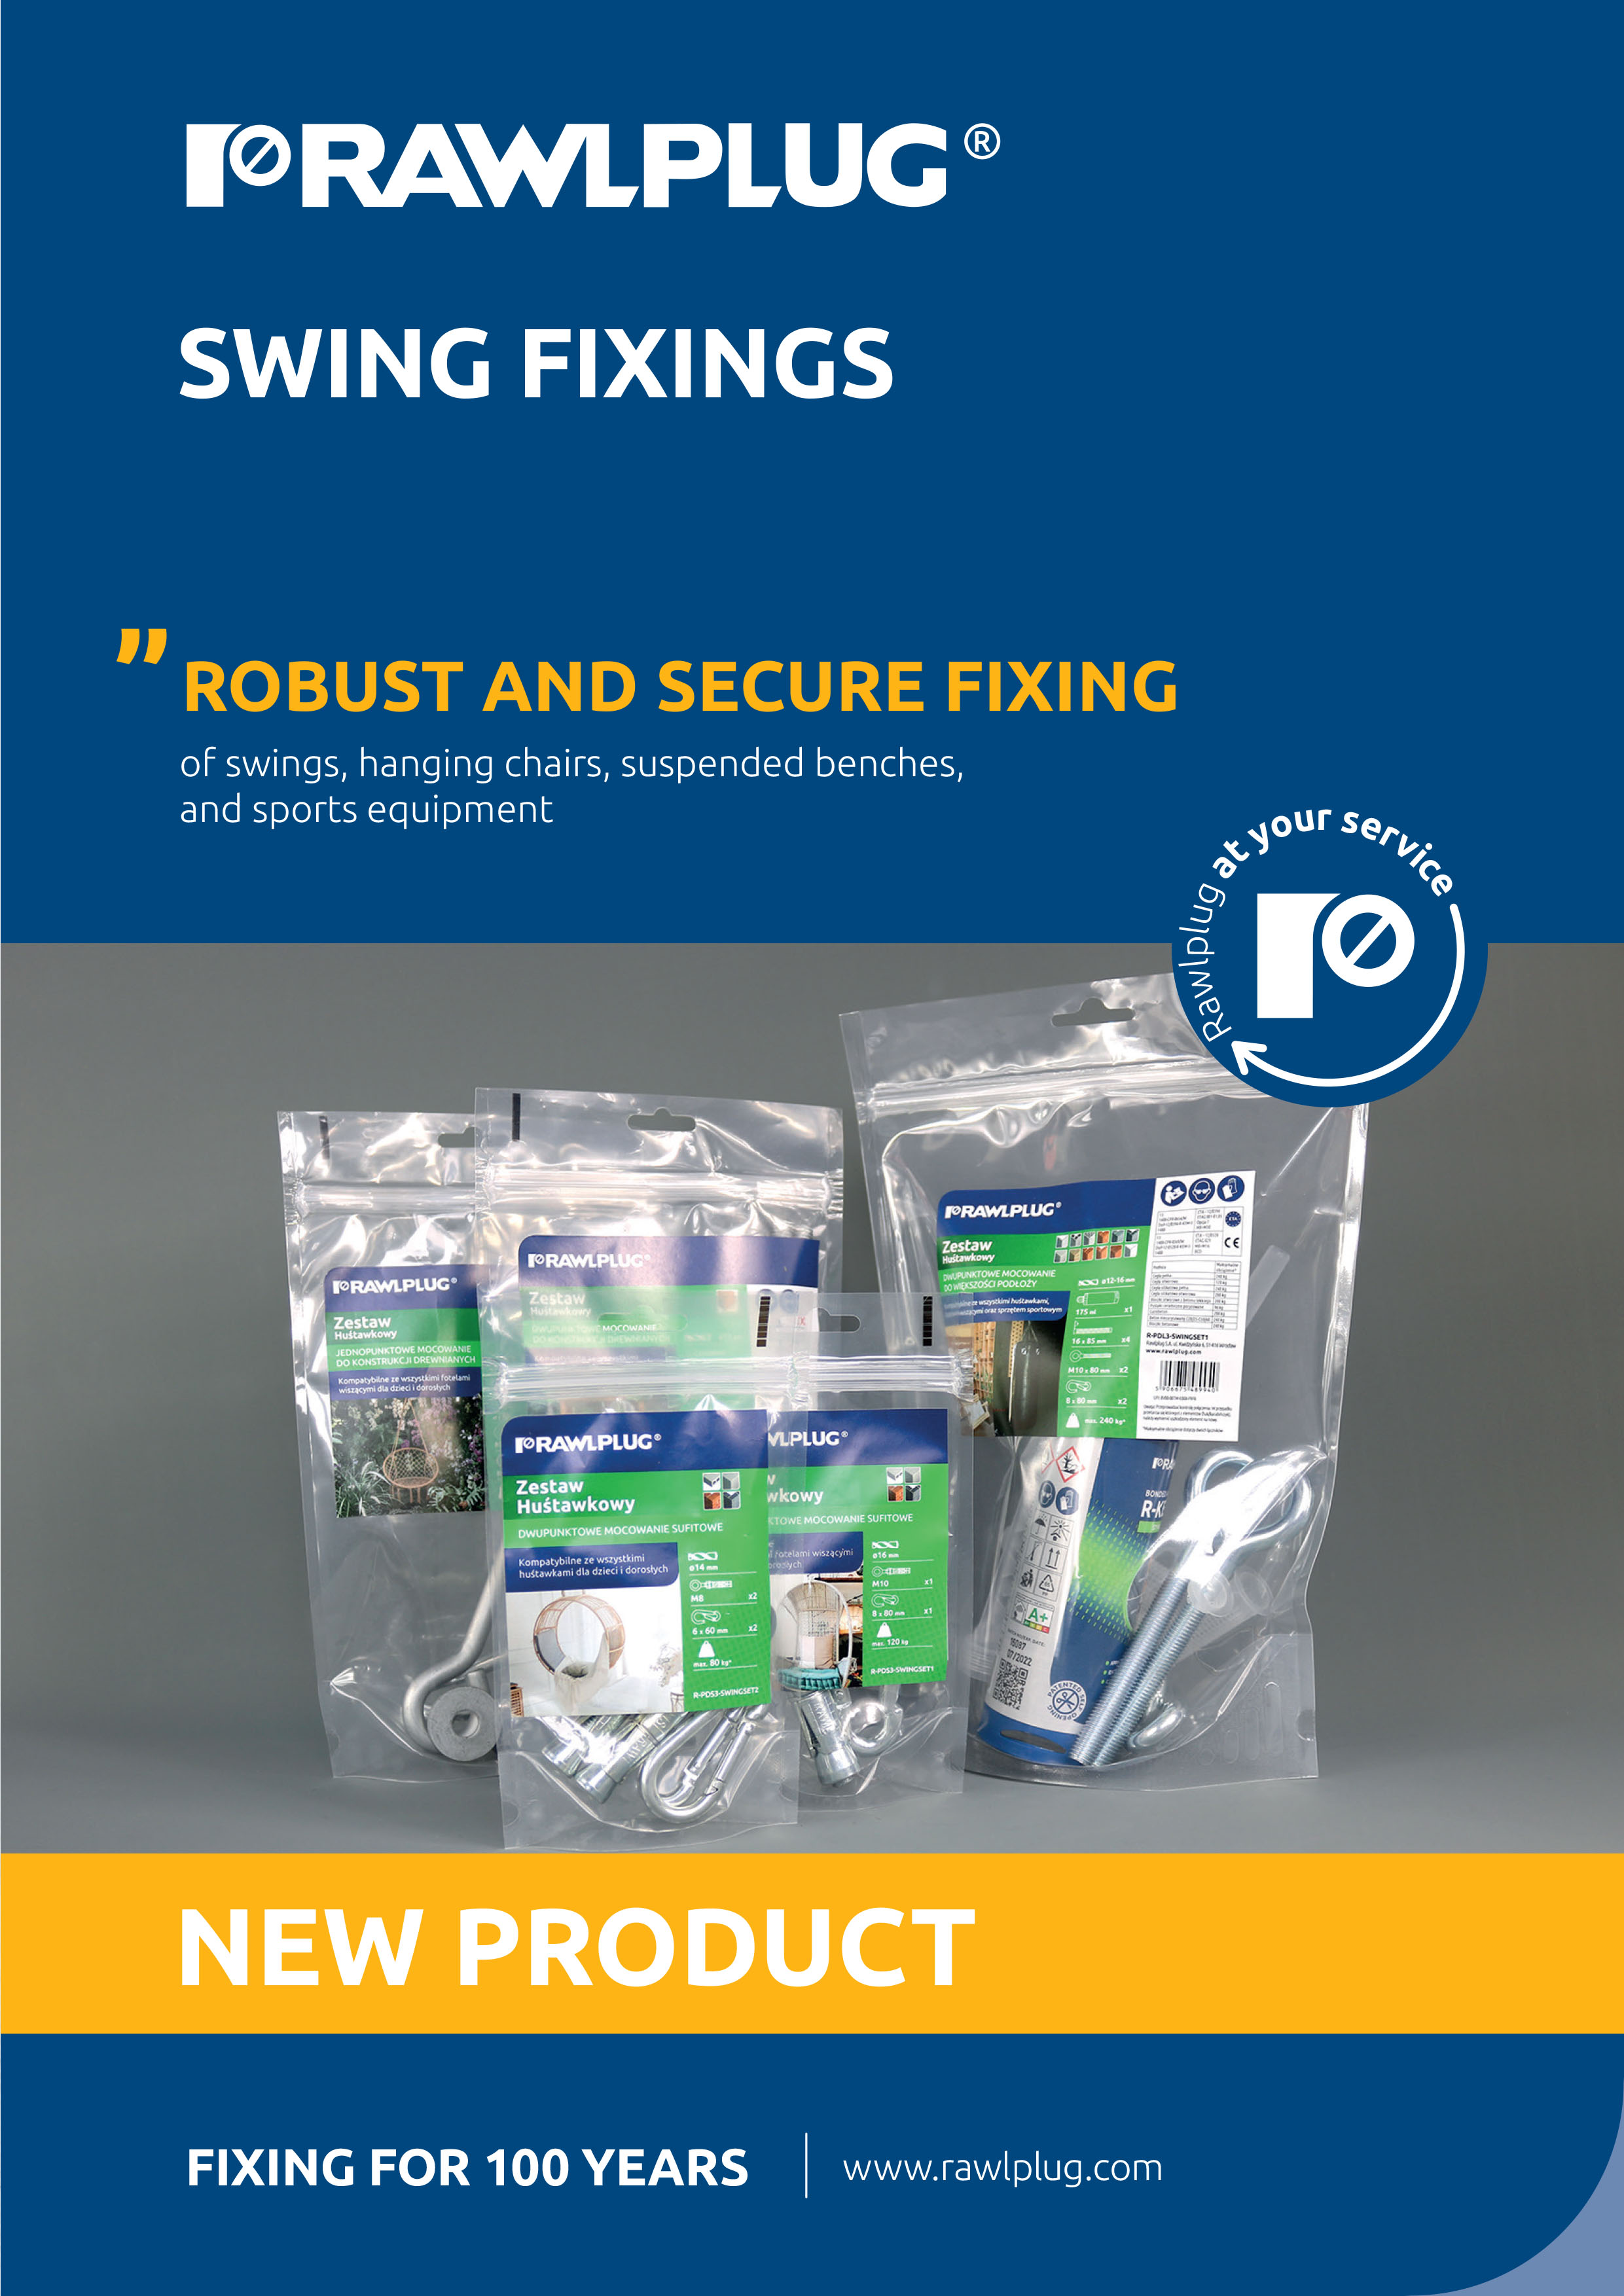 Rawlplug Swing Fixings